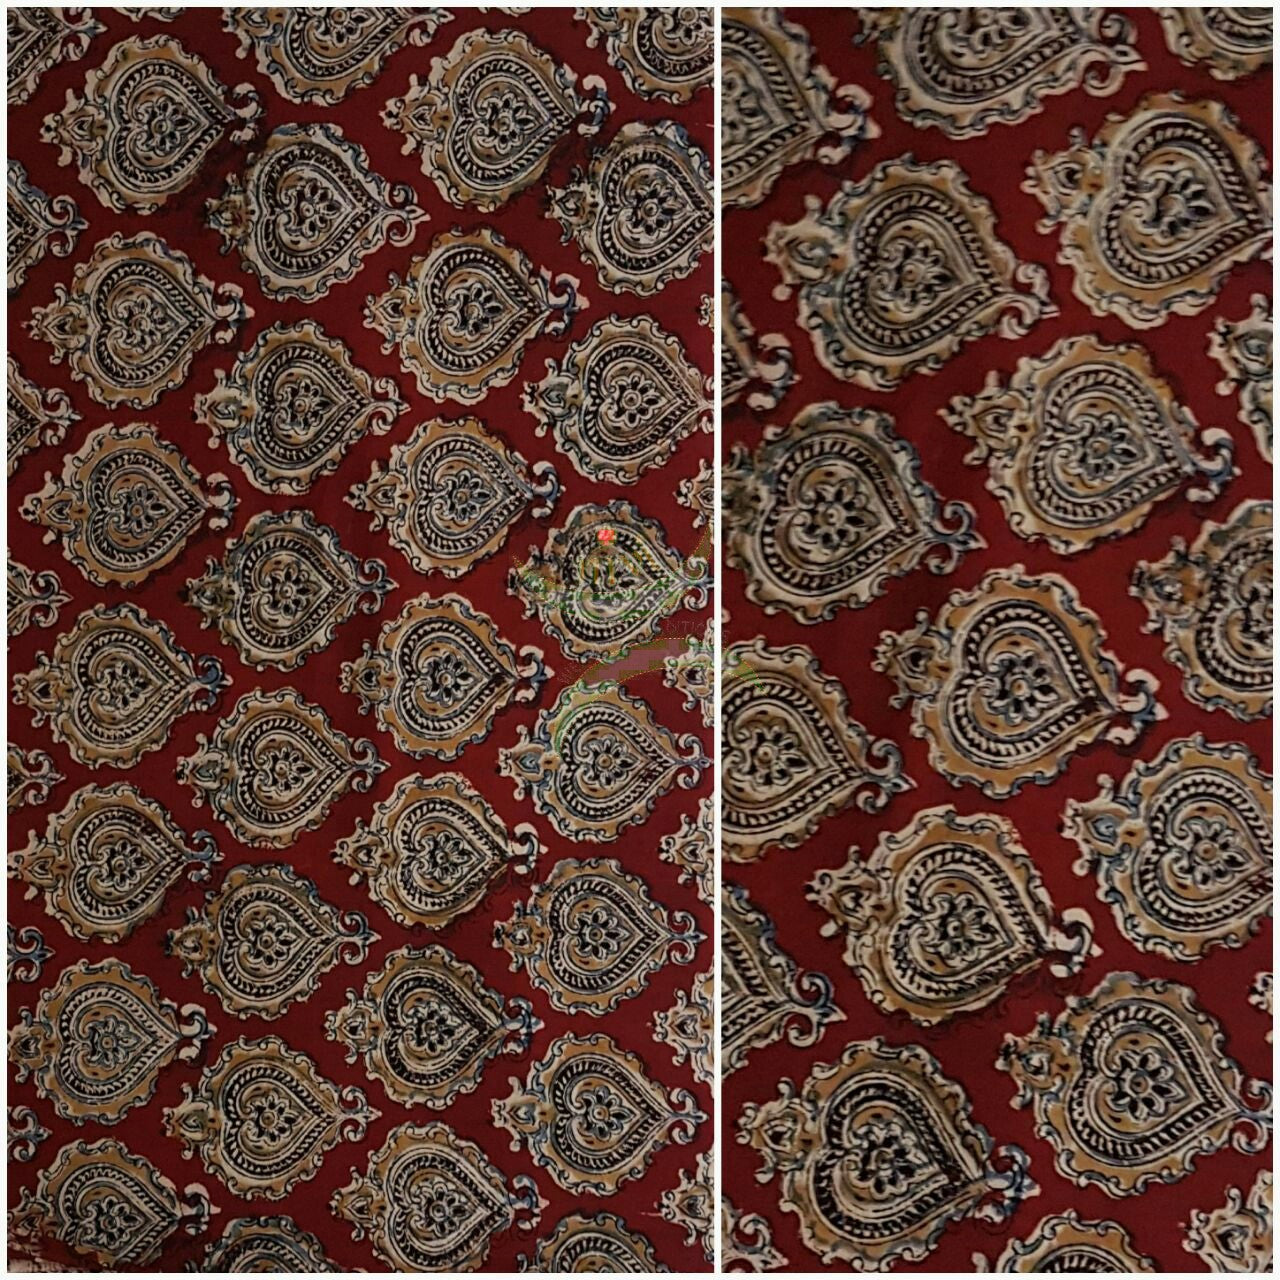 Maroon handwoven cotton kalamkari material with floral motifs.